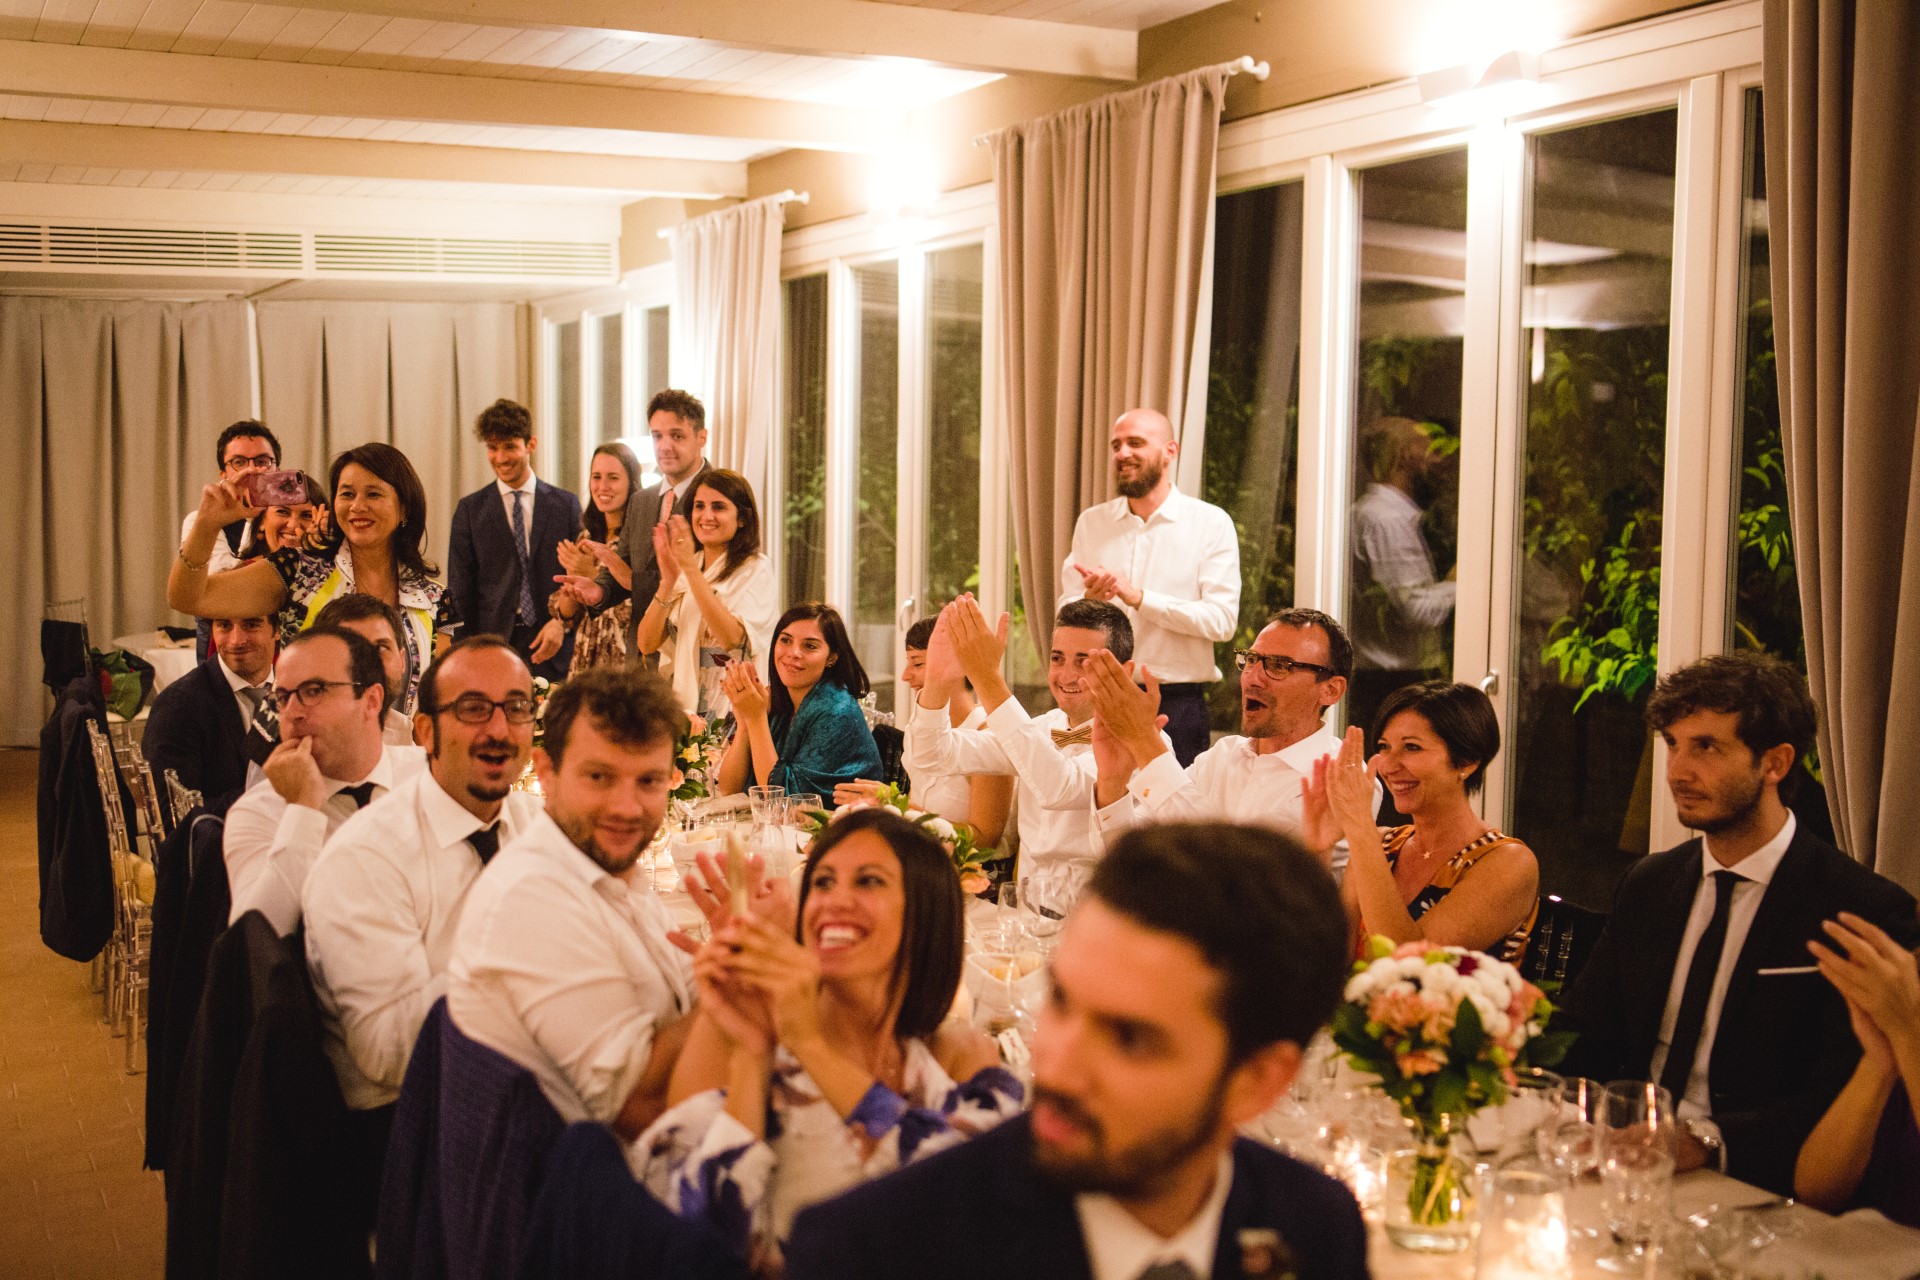 Vale&Ale fotografo matrimonio destination wedding photographer videographer luxury reportage italia italy como lake amalfi coast apulia rome roma sicily masseria potenti tuscany milan